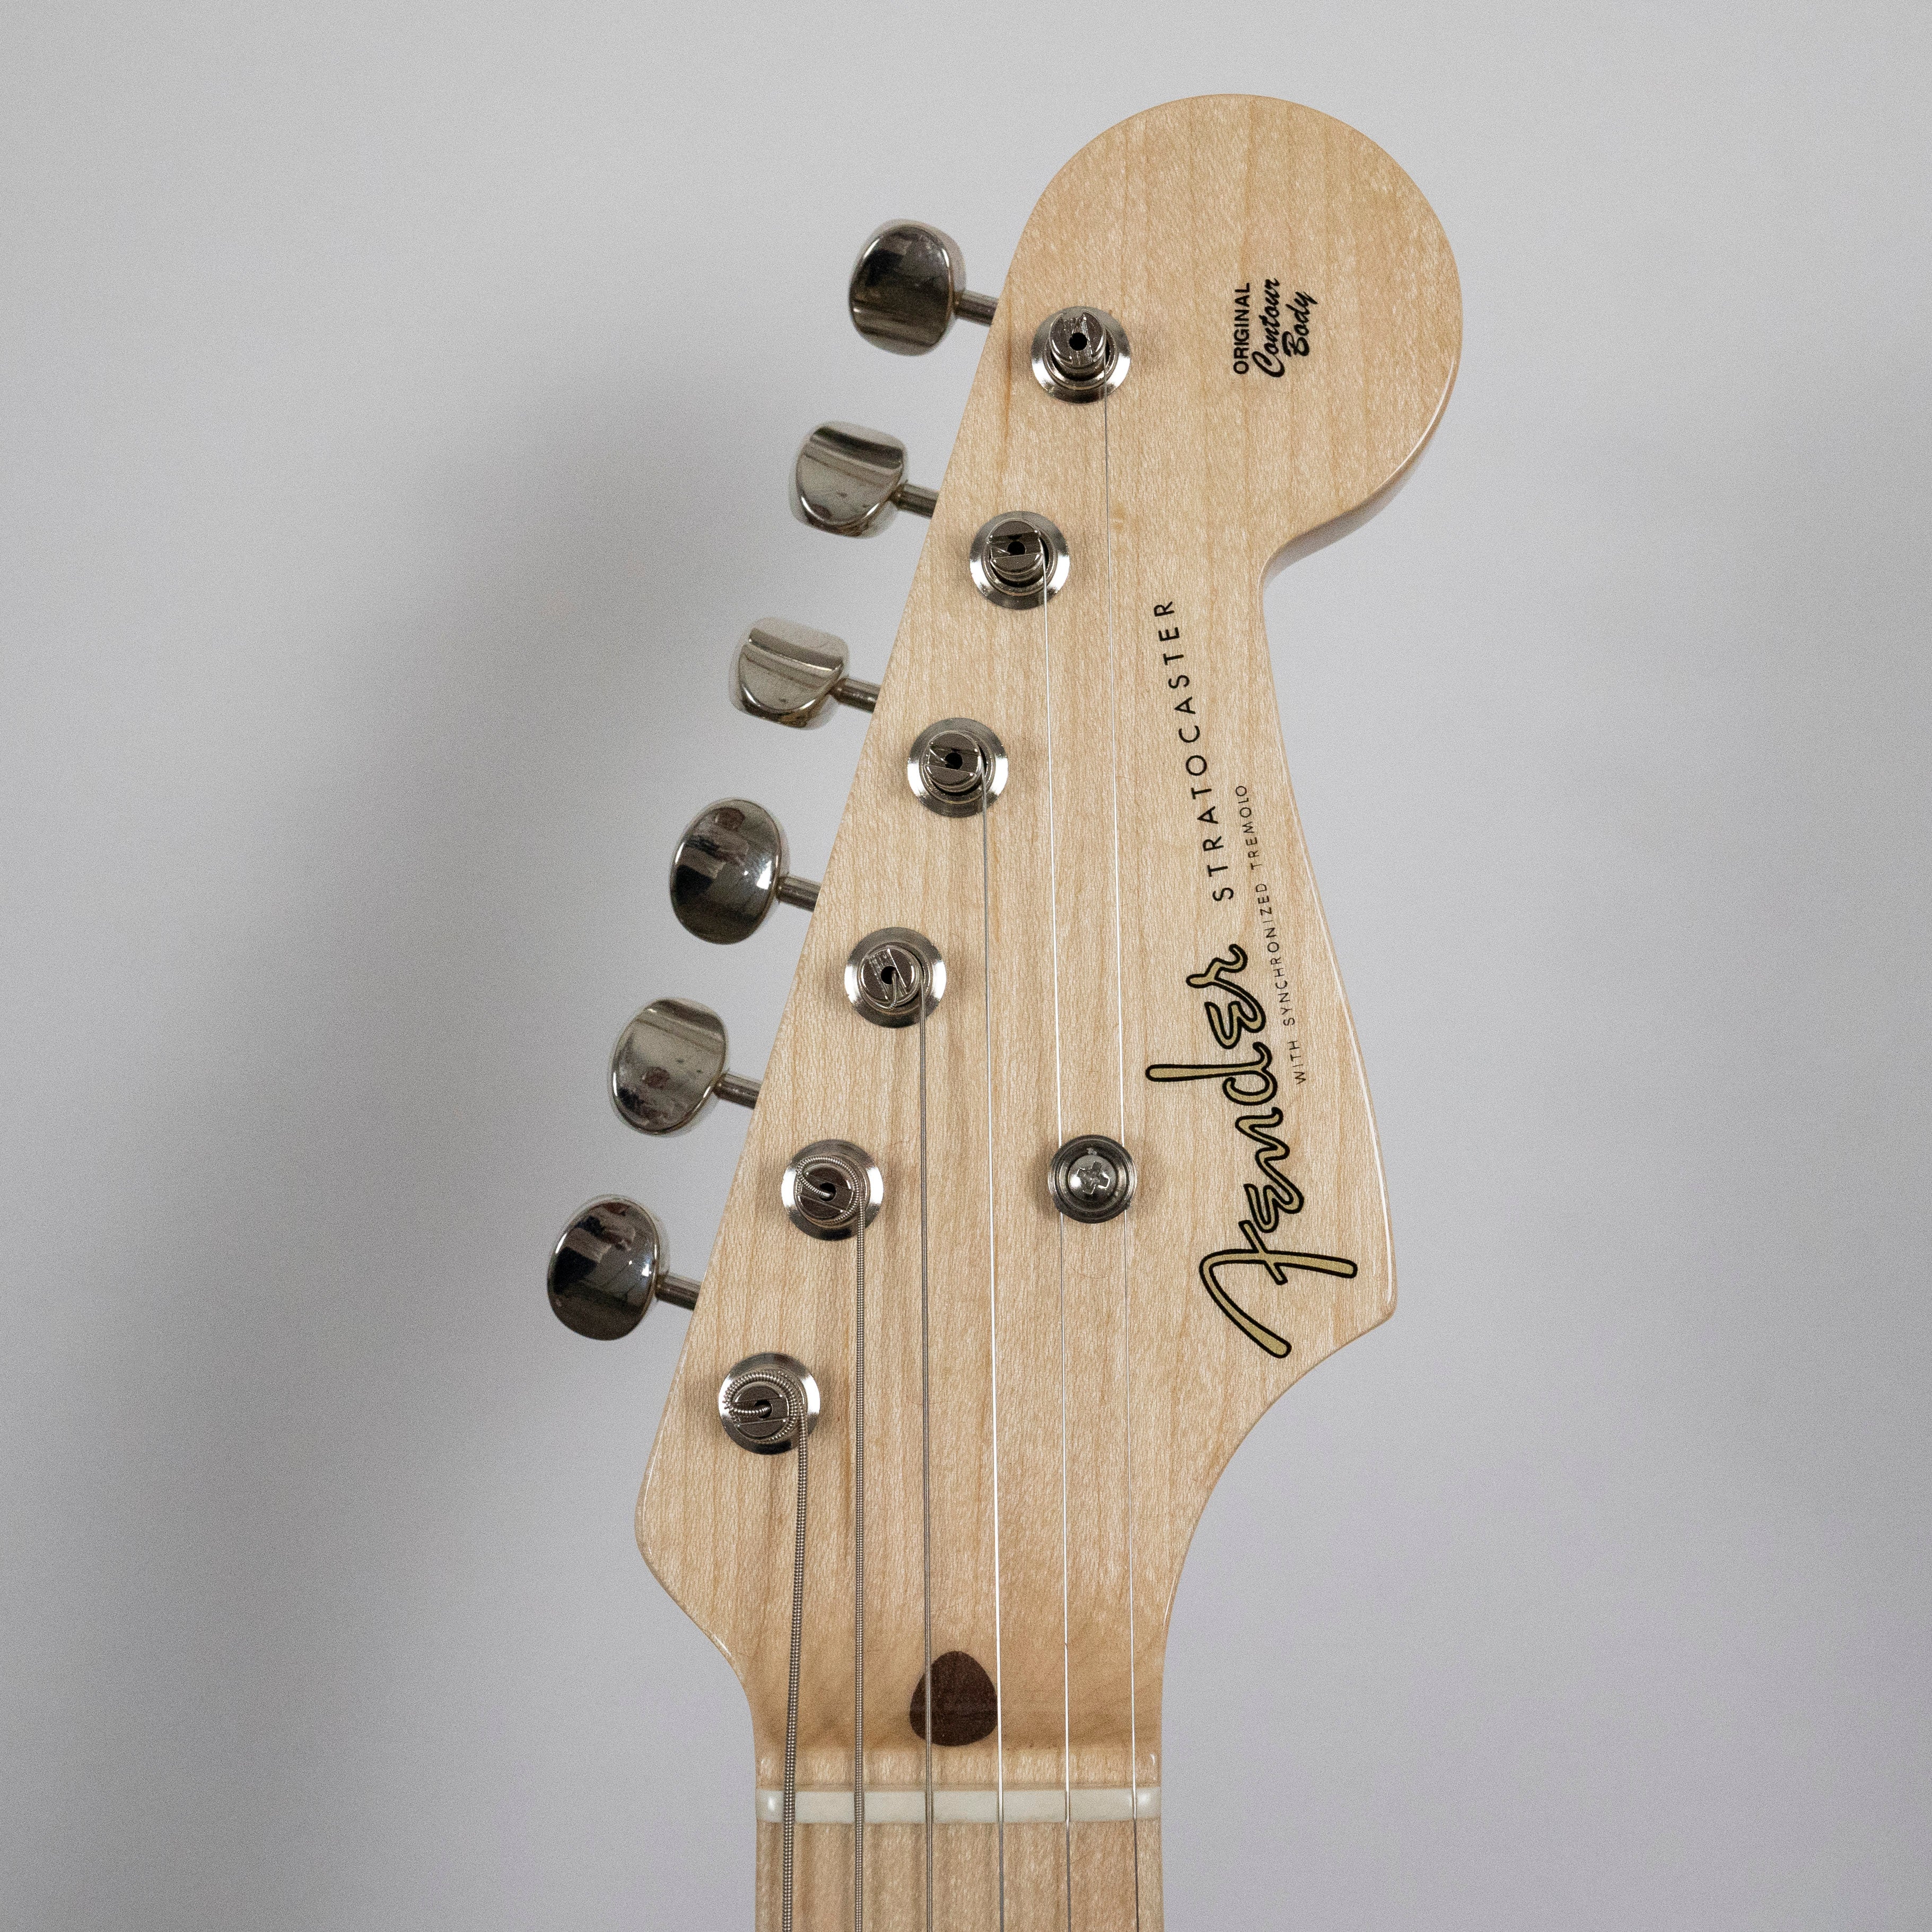 Fender Custom Shop "Rudy's 1955 Strat" Ash, Two-Tone Sunburst